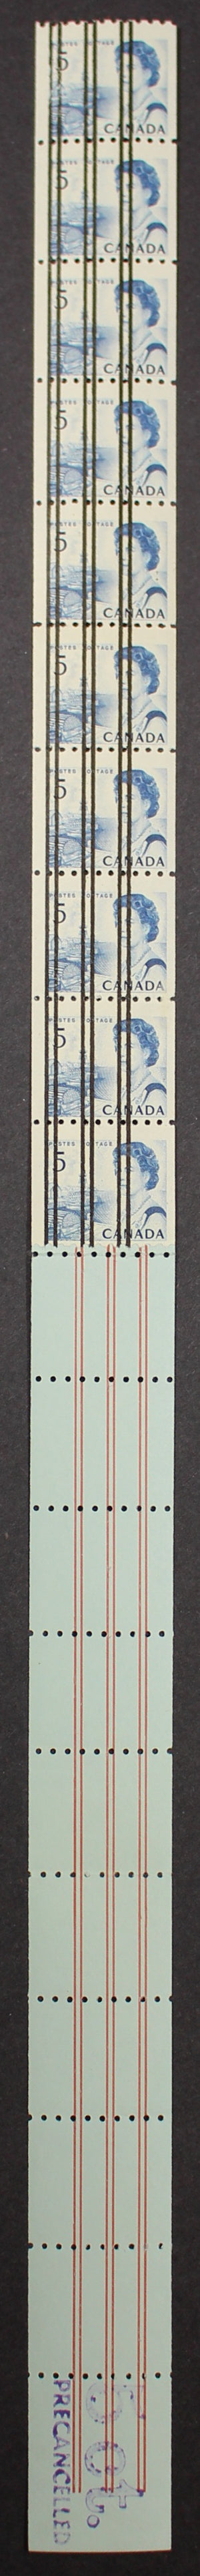 0468CA1810 - Canada #468xxi Mint Precancelled Start Strip of 10